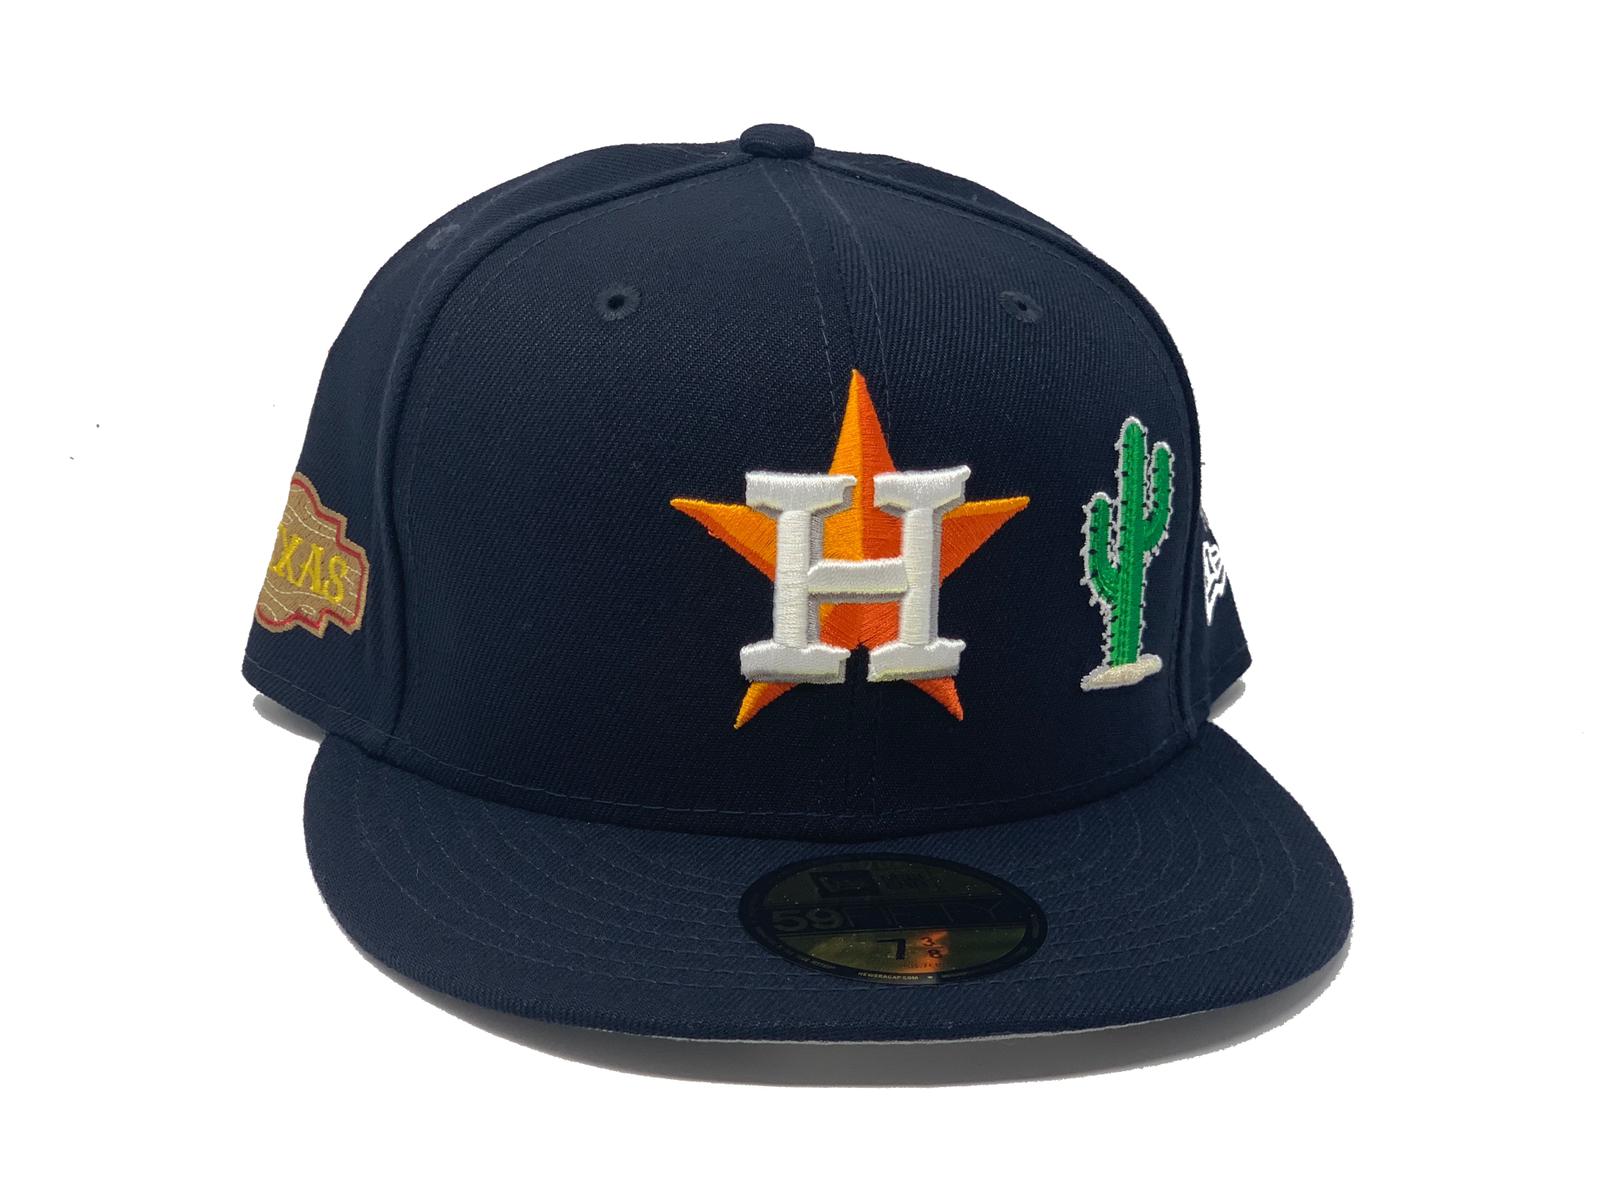 Houston Astros MLB Nightbreak Team Blue 59FIFTY Fitted Cap